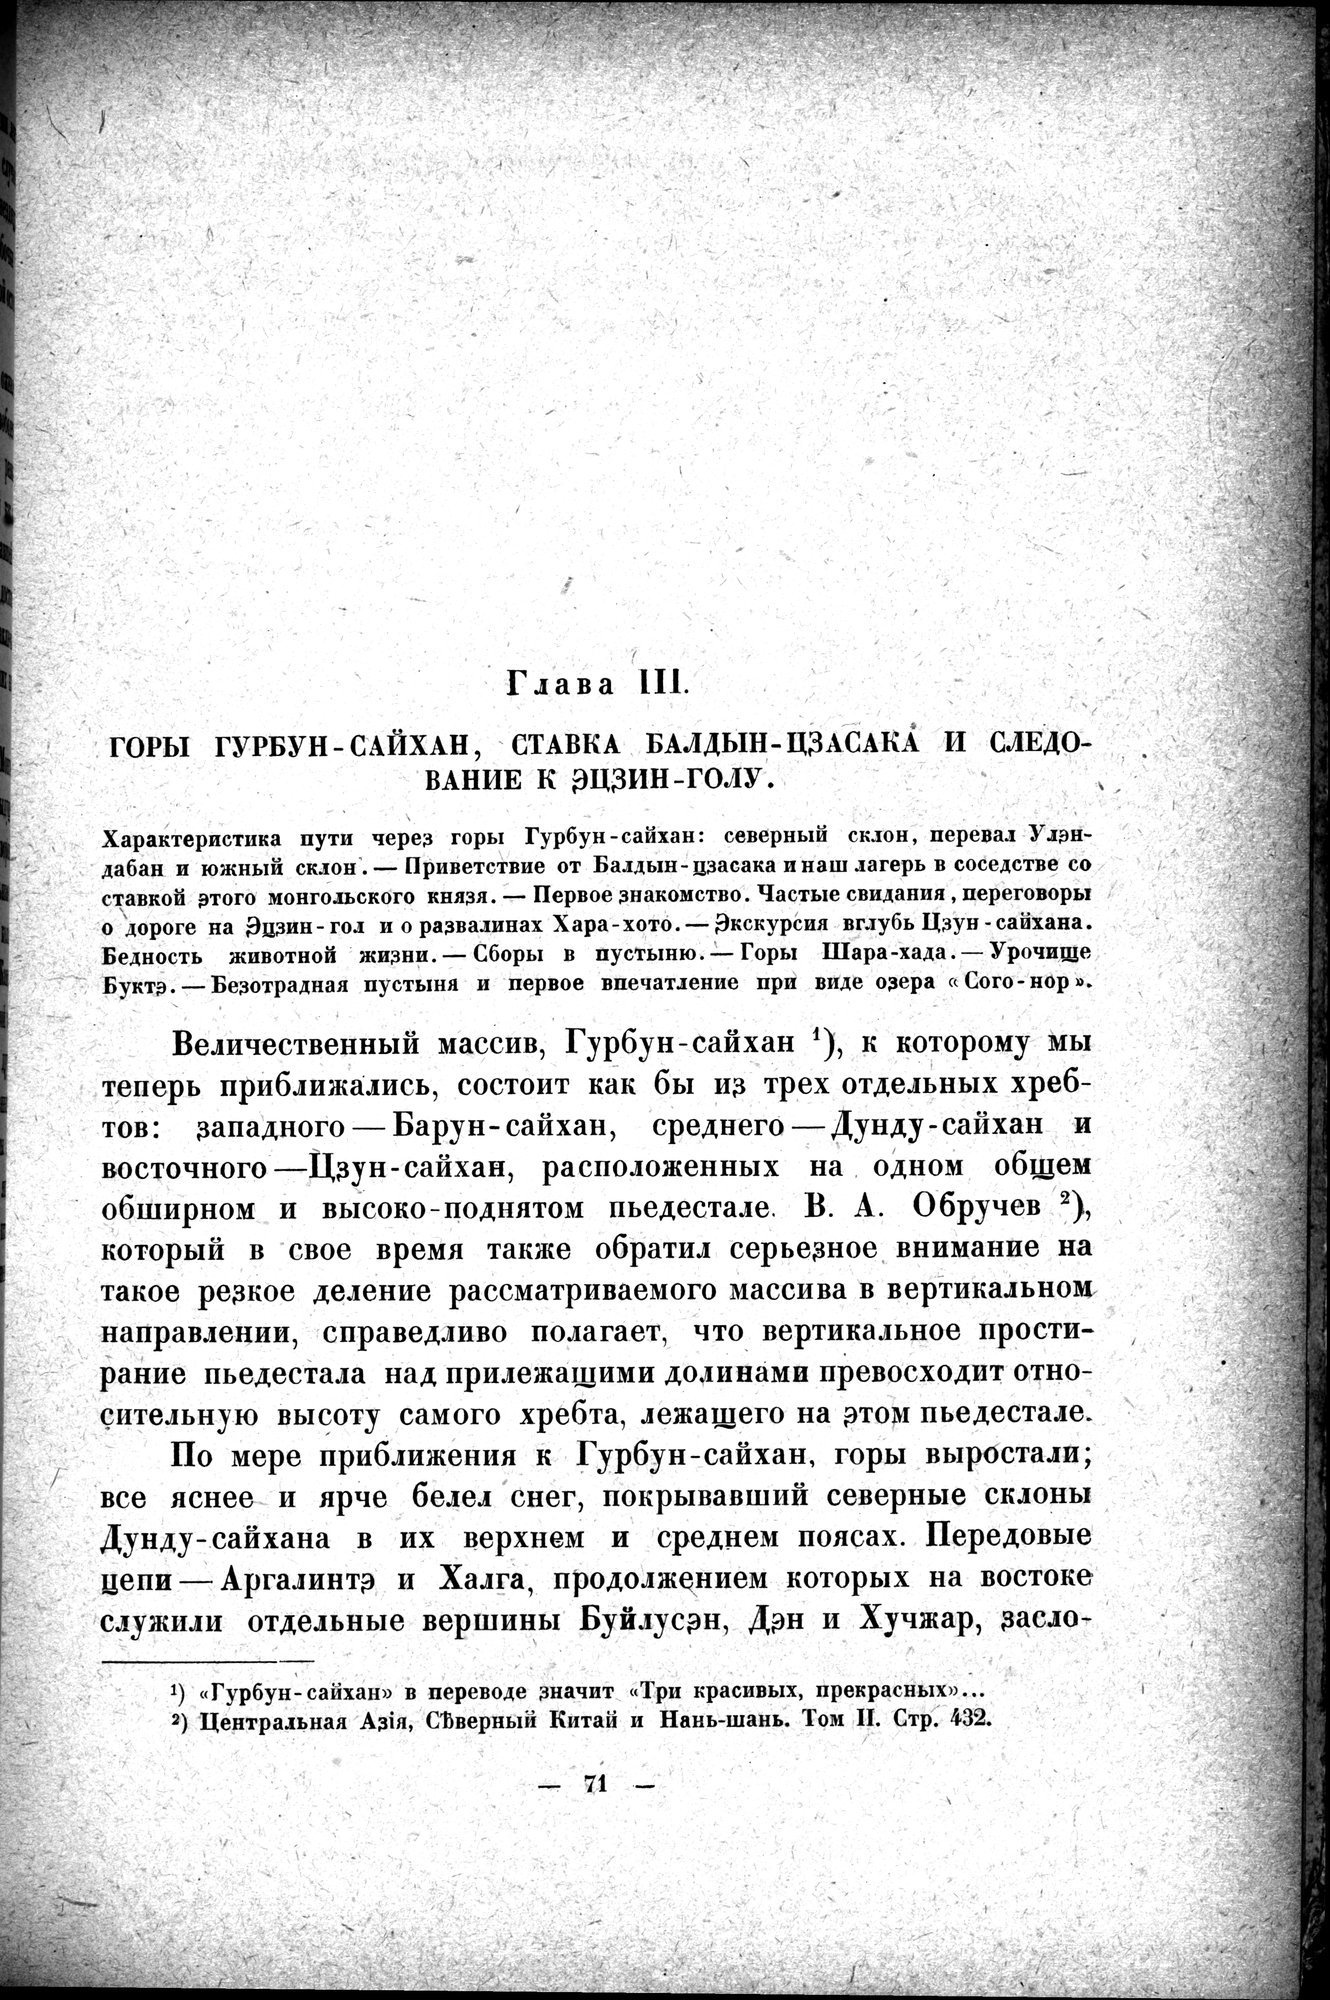 Mongoliya i Amdo i mertby gorod Khara-Khoto : vol.1 / Page 95 (Grayscale High Resolution Image)